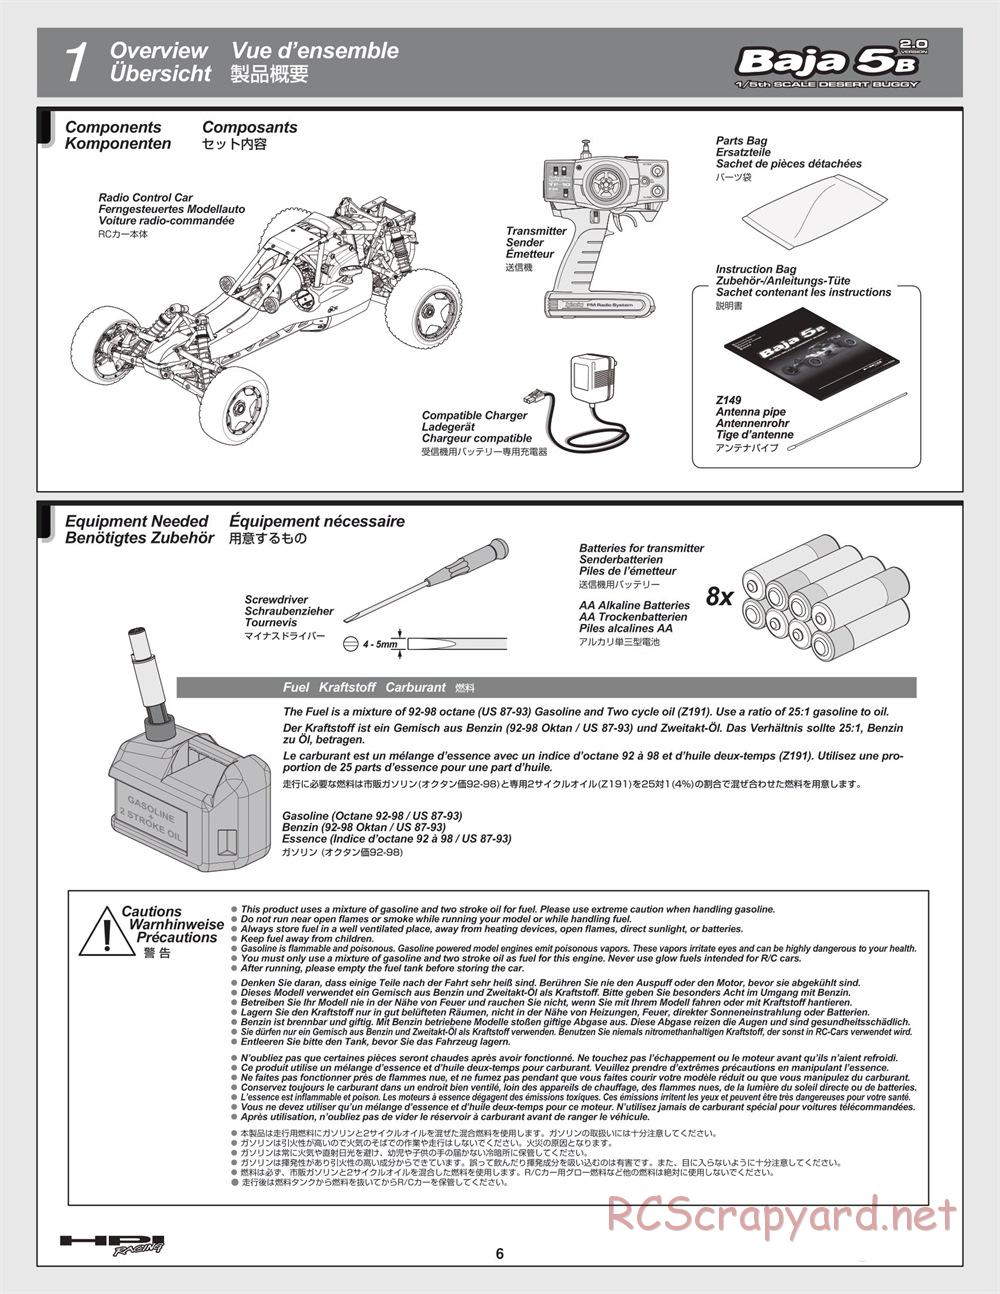 HPI - Baja 5B 2.0 - Manual - Page 6